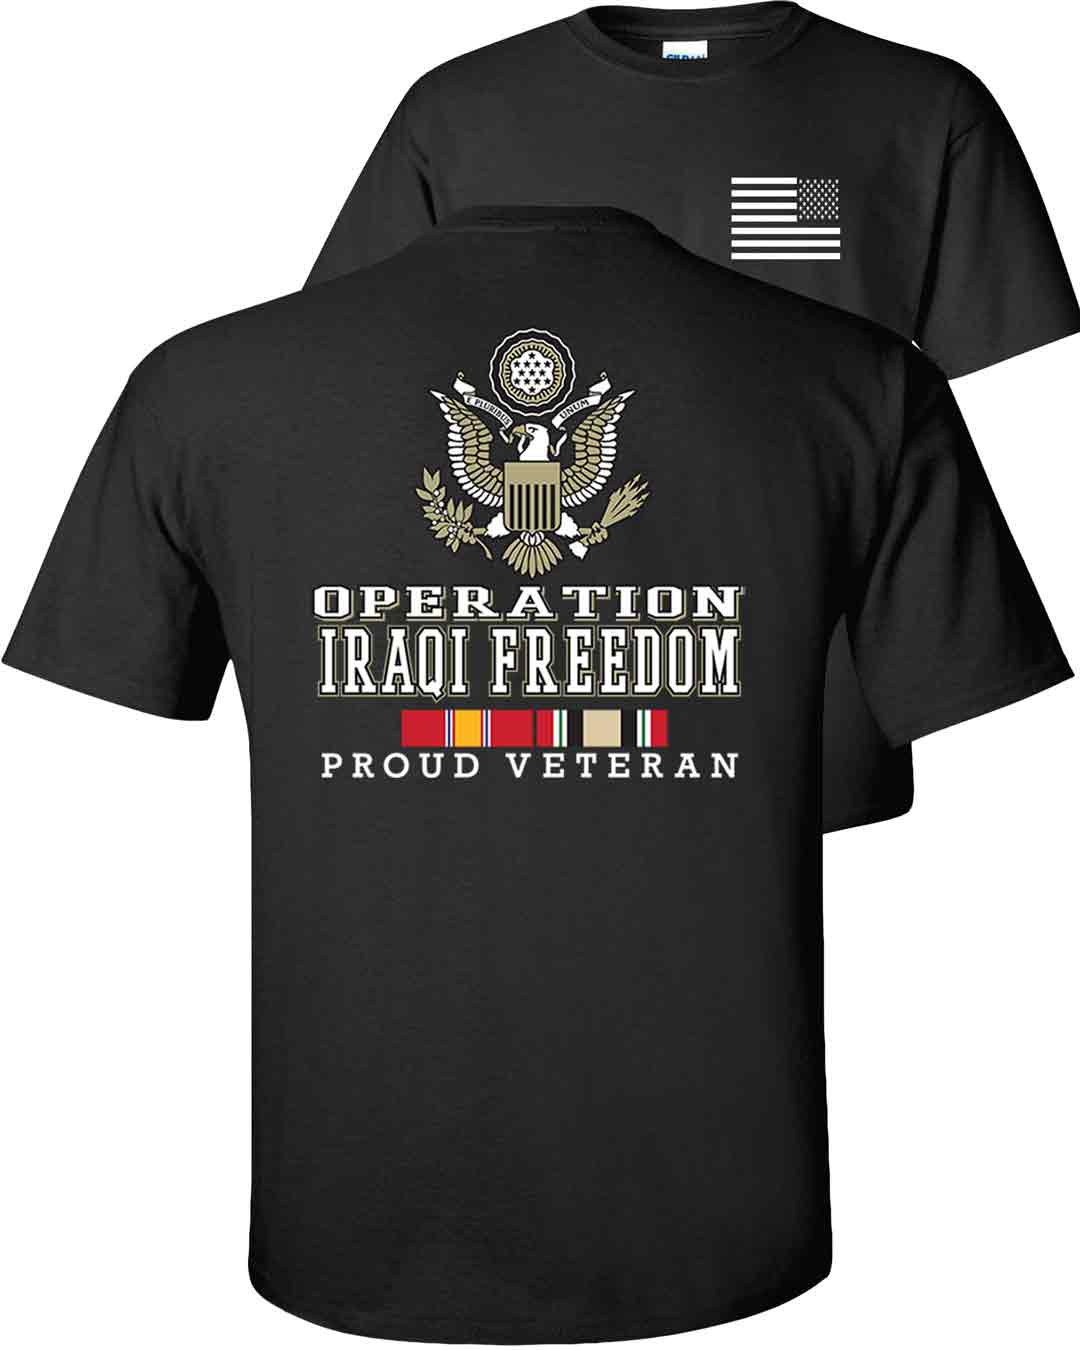 iraq-freedom-eagle-black.jpg